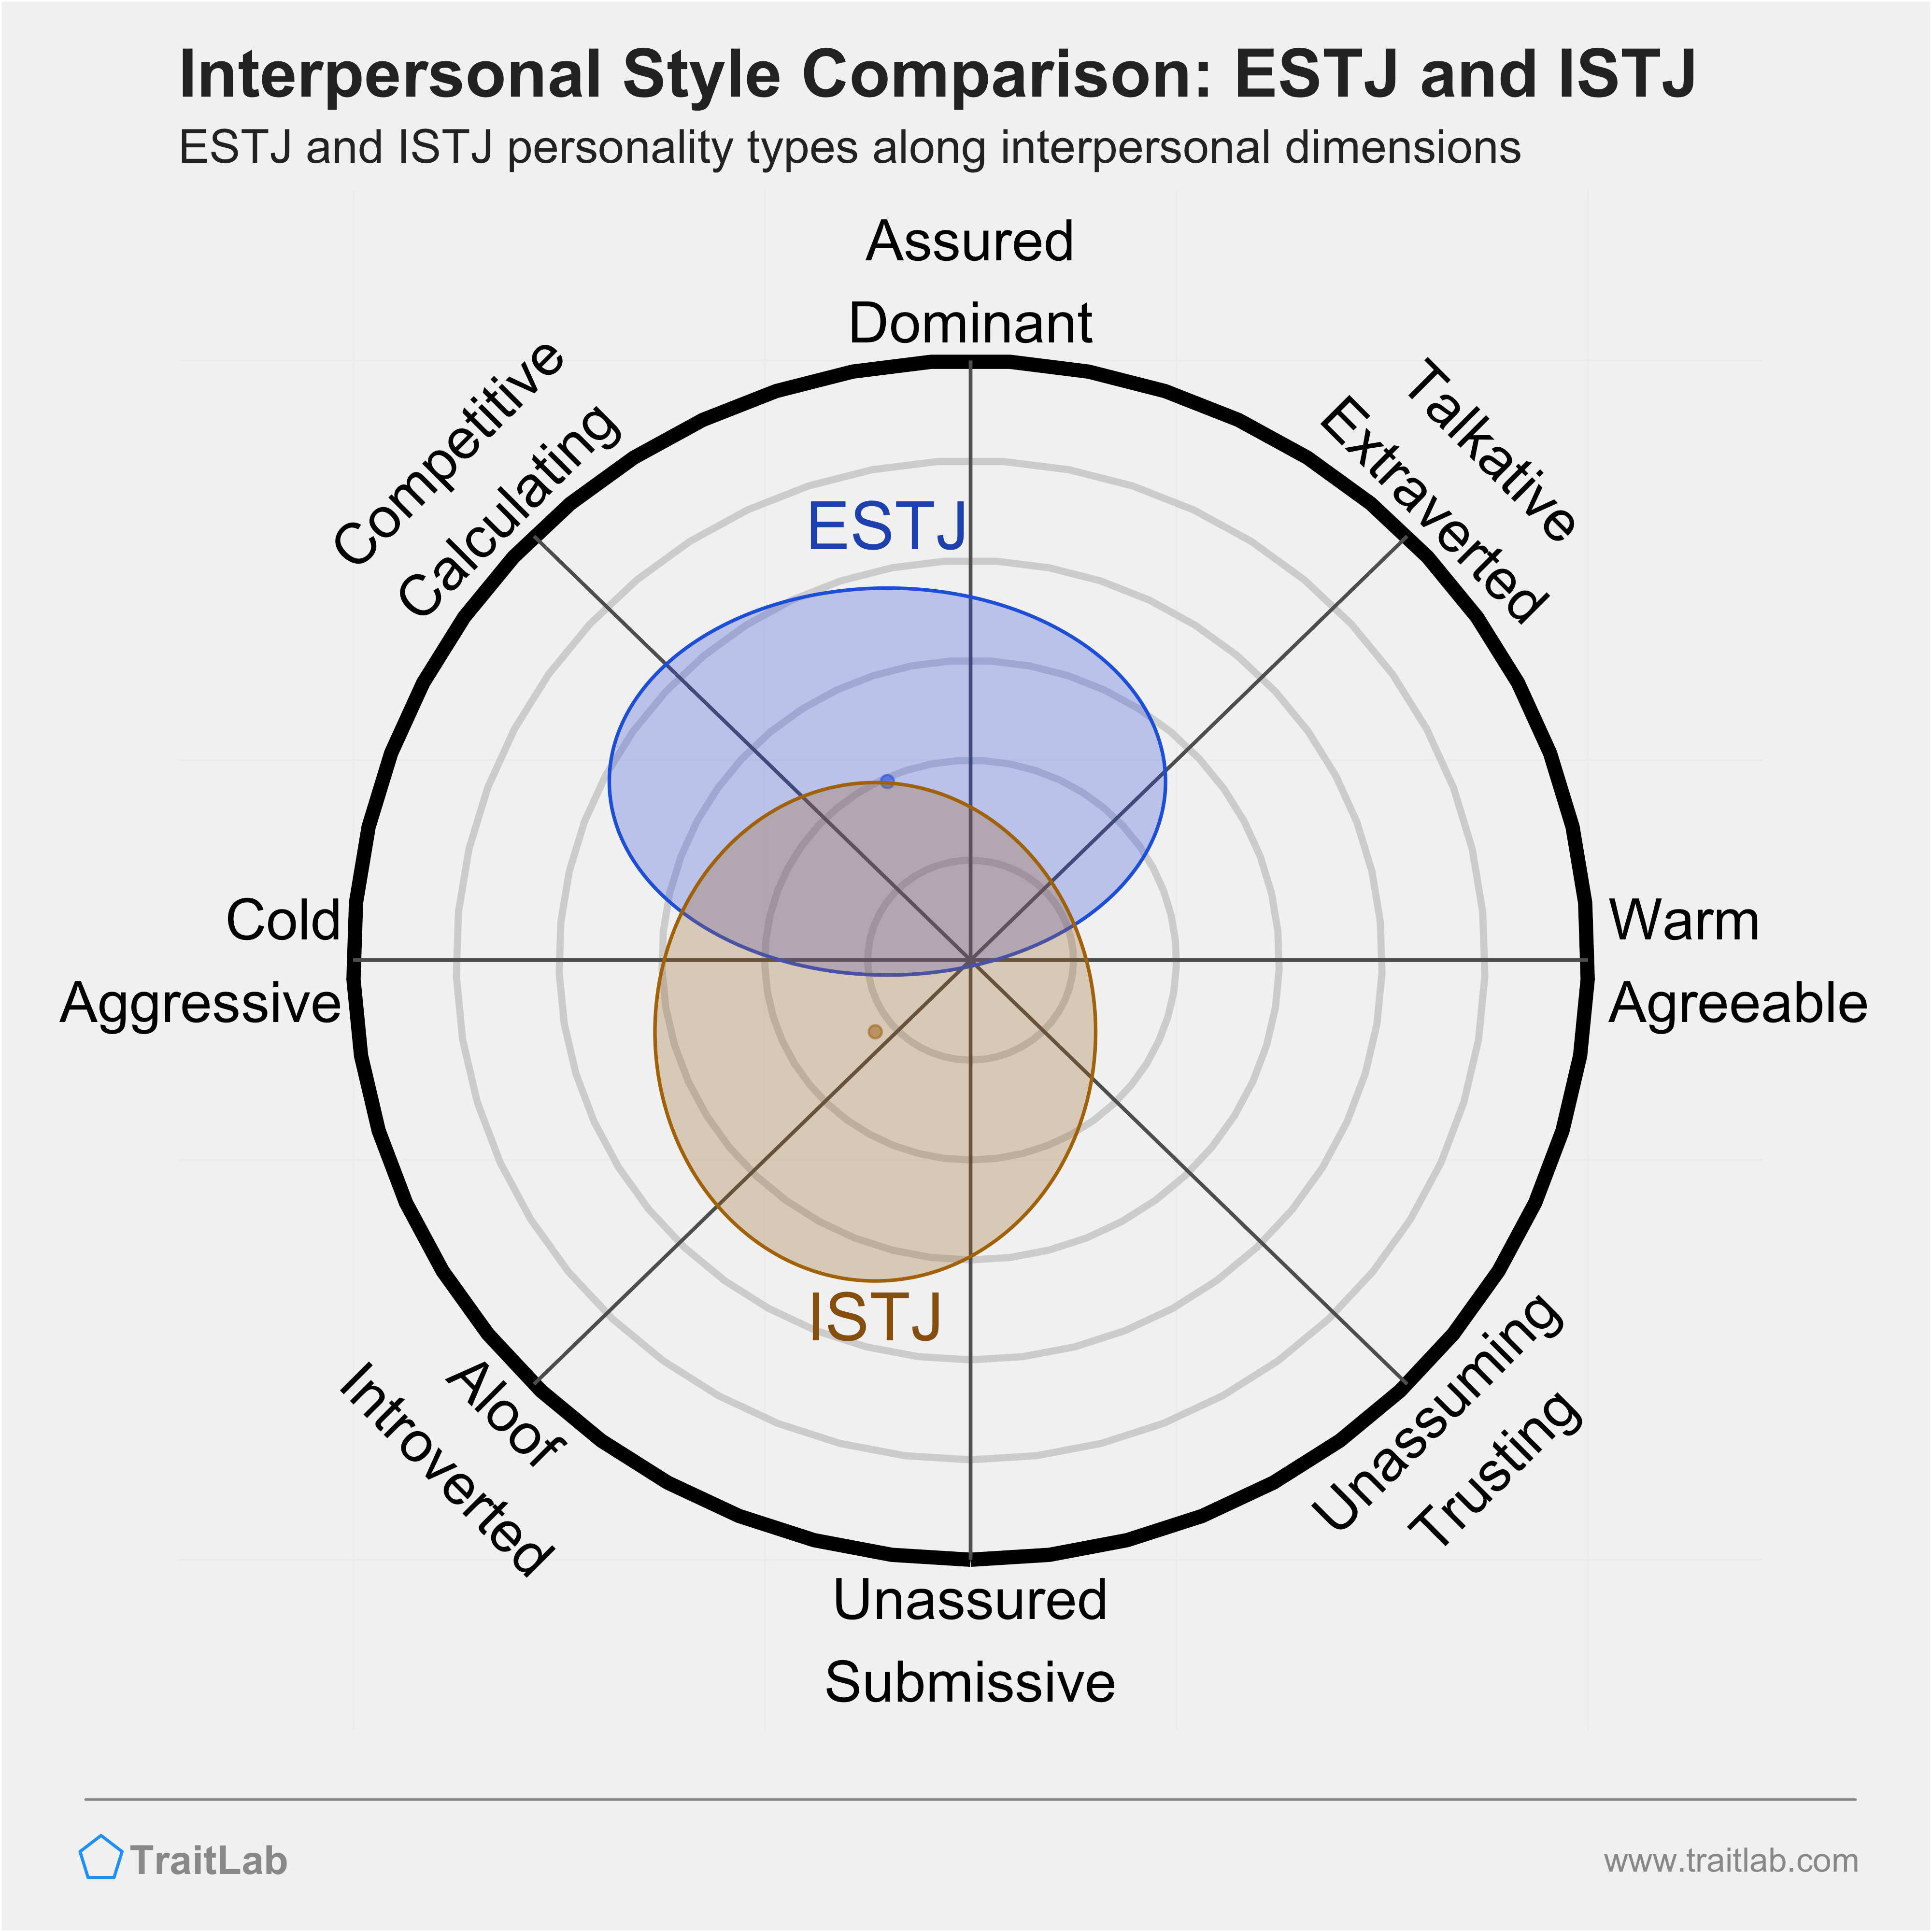 ESTJ and ISTJ comparison across interpersonal dimensions